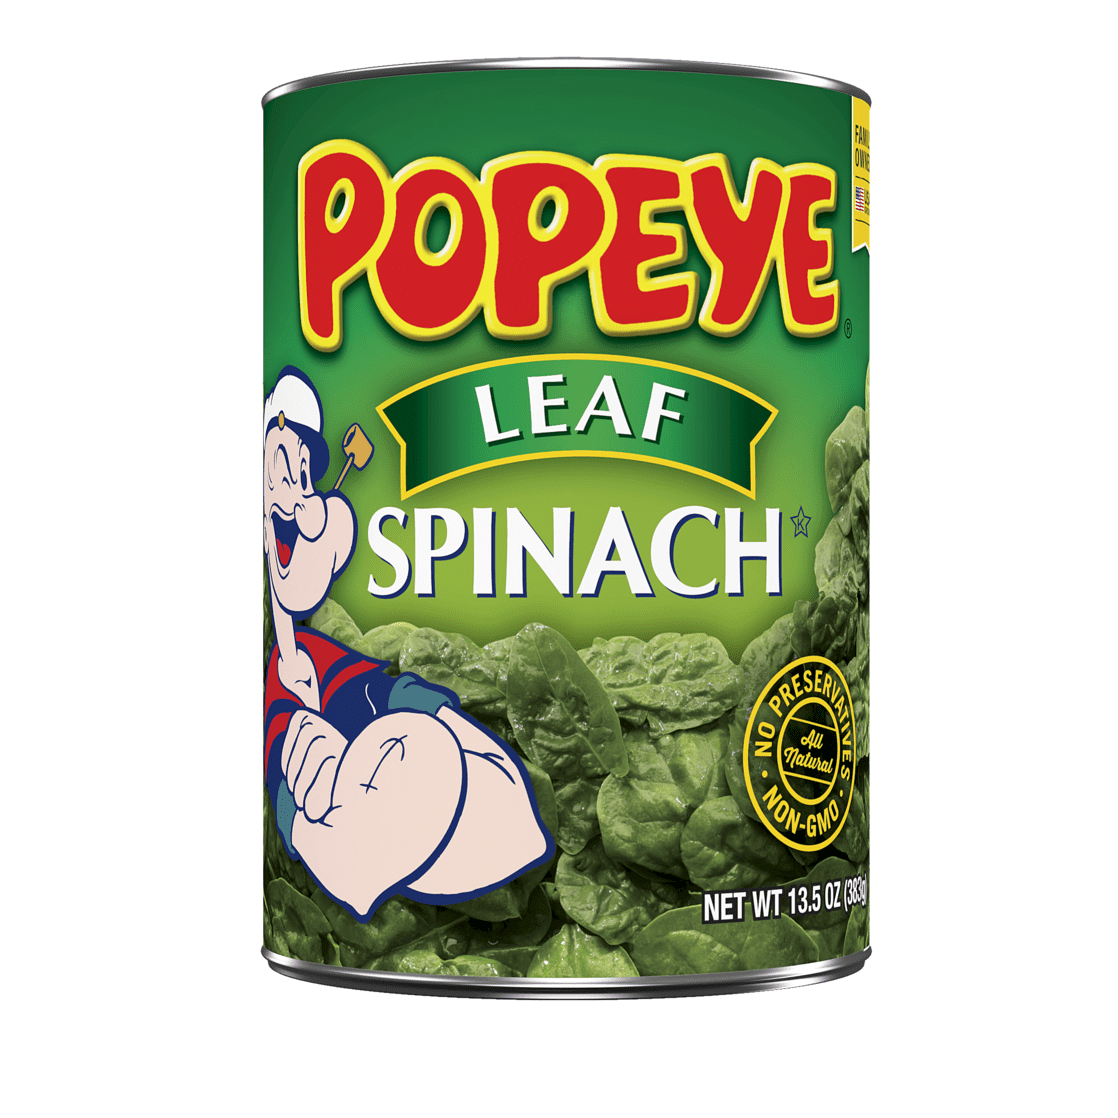 Popeye Leaf Spinach, Canned Vegetables, 13.5 oz Can - Walmart.com